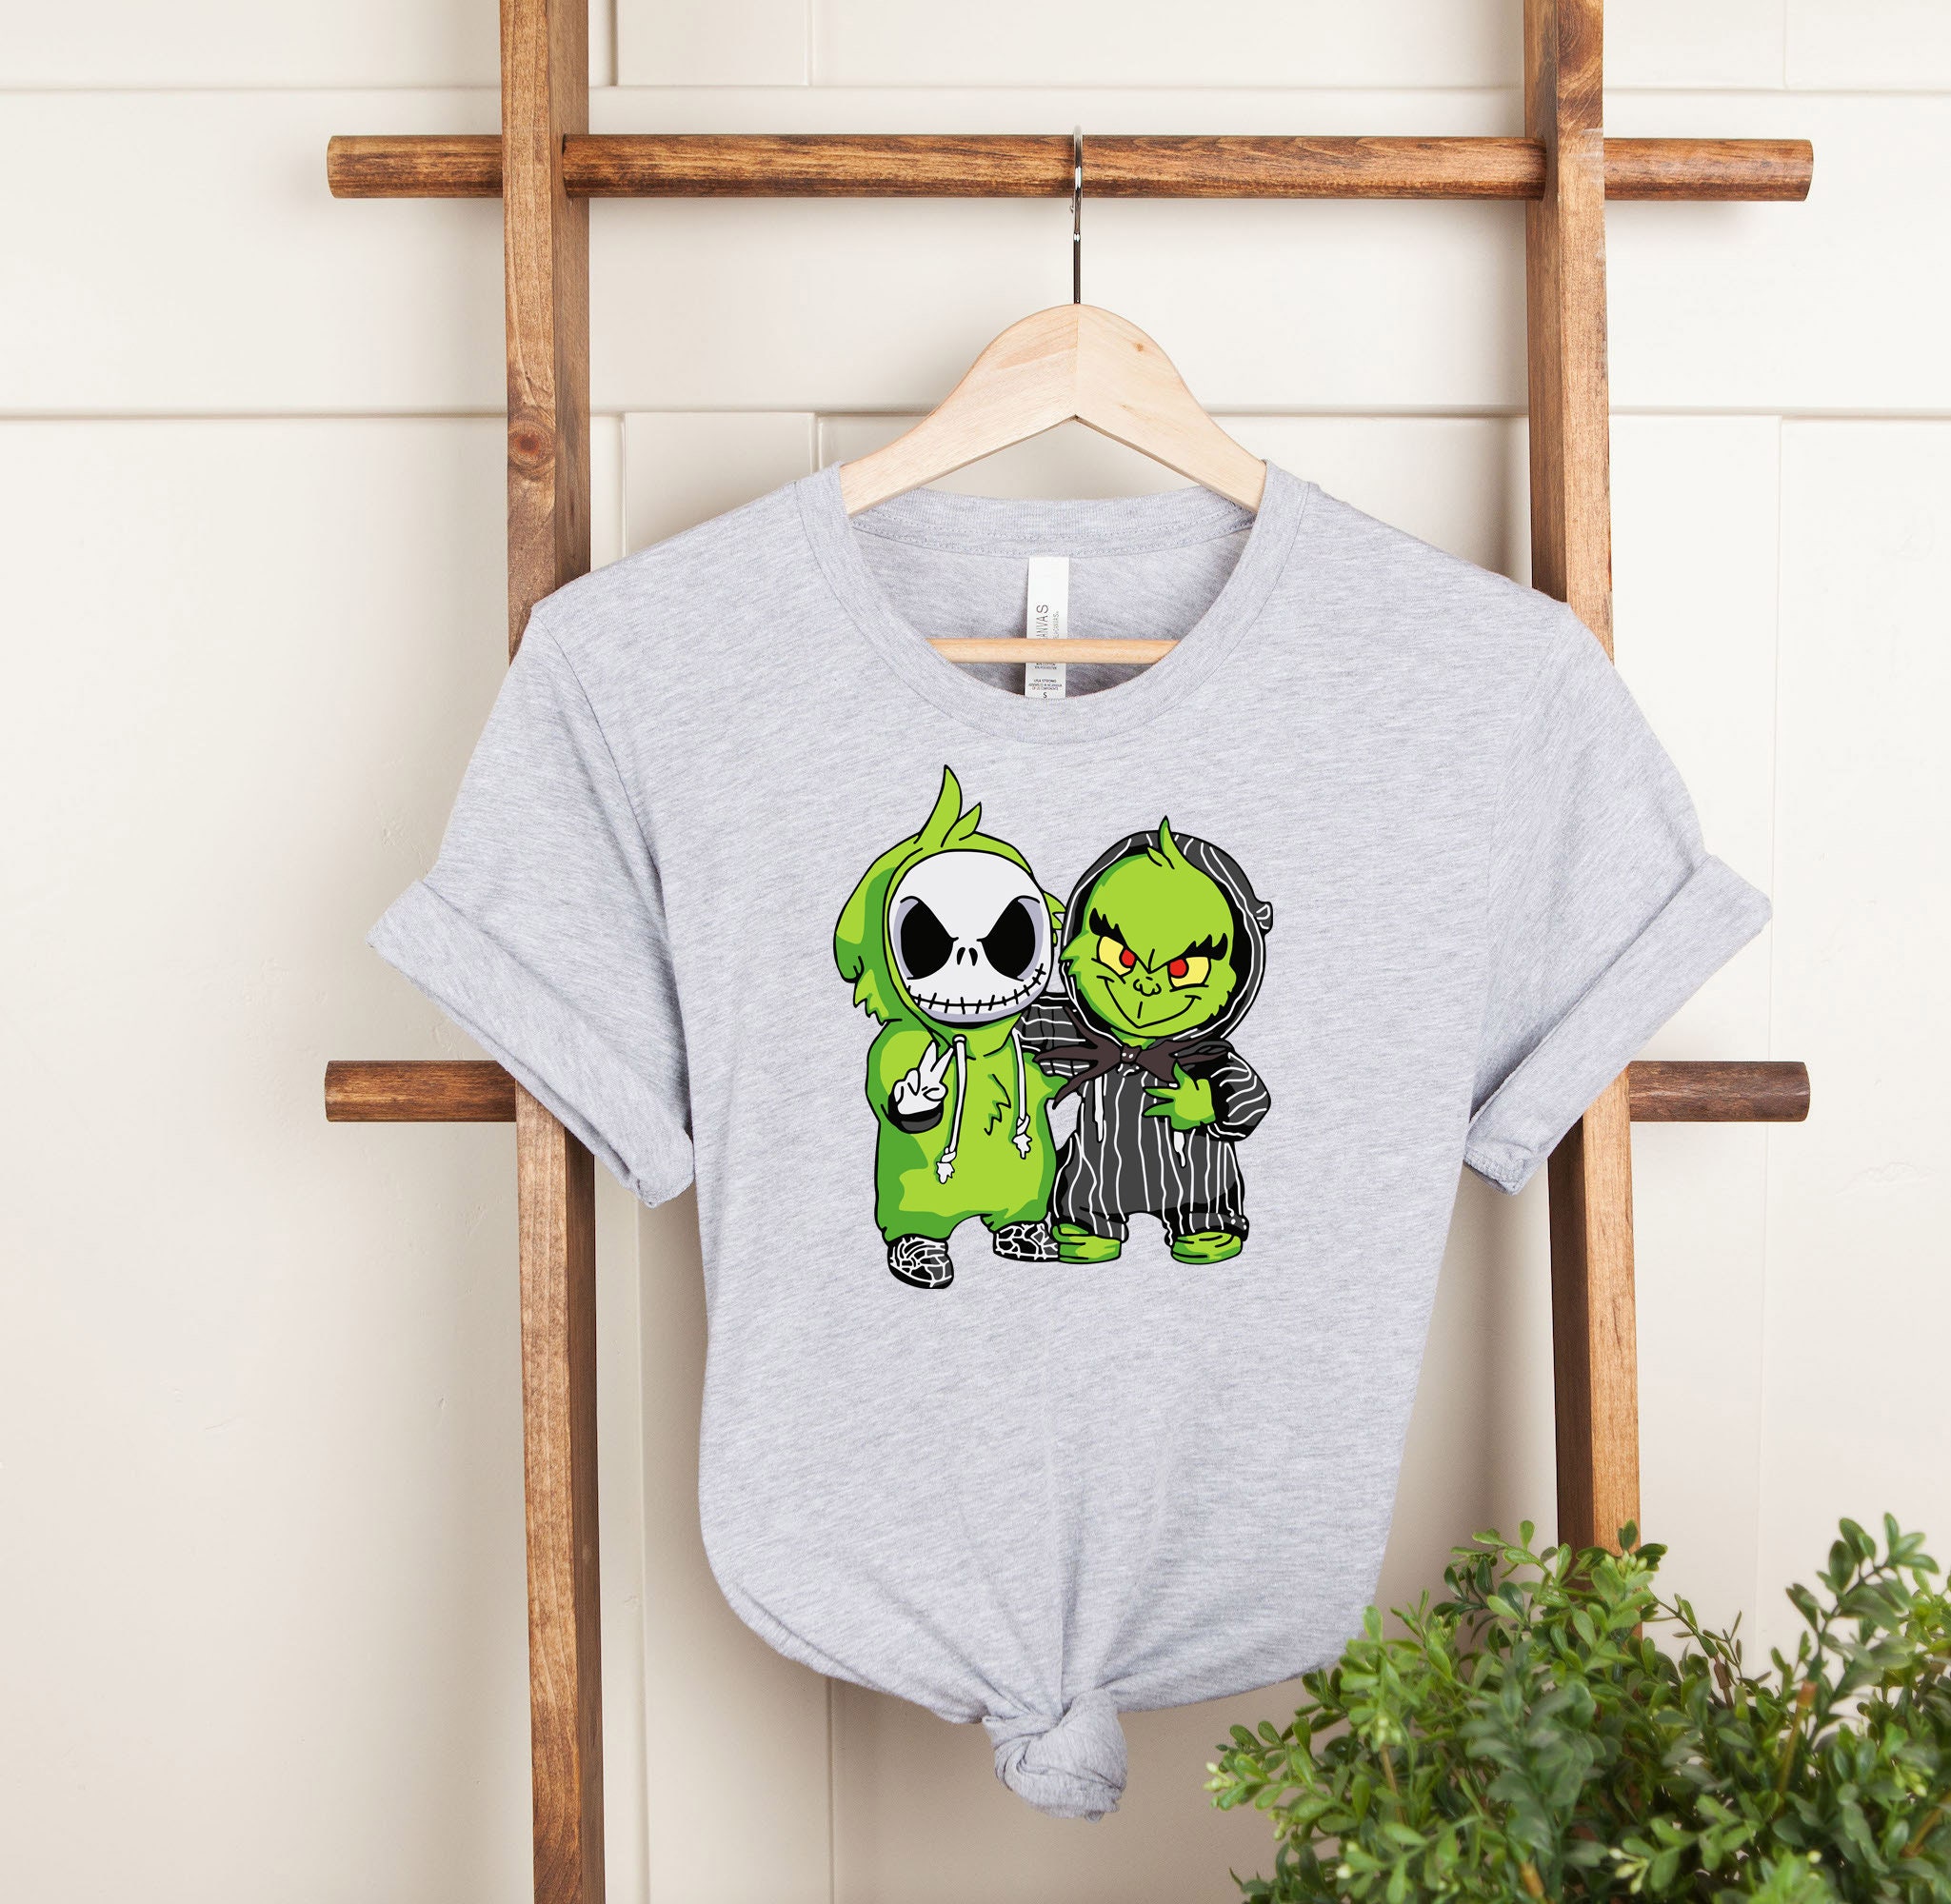 Discover Jack Skellington Shirt, The Grinch Tshirt, Cute Halloween Shirt, Spooky Tshirt, Oogie Boogie Shirt, Skellington Sweatshirt, Halloween Kids